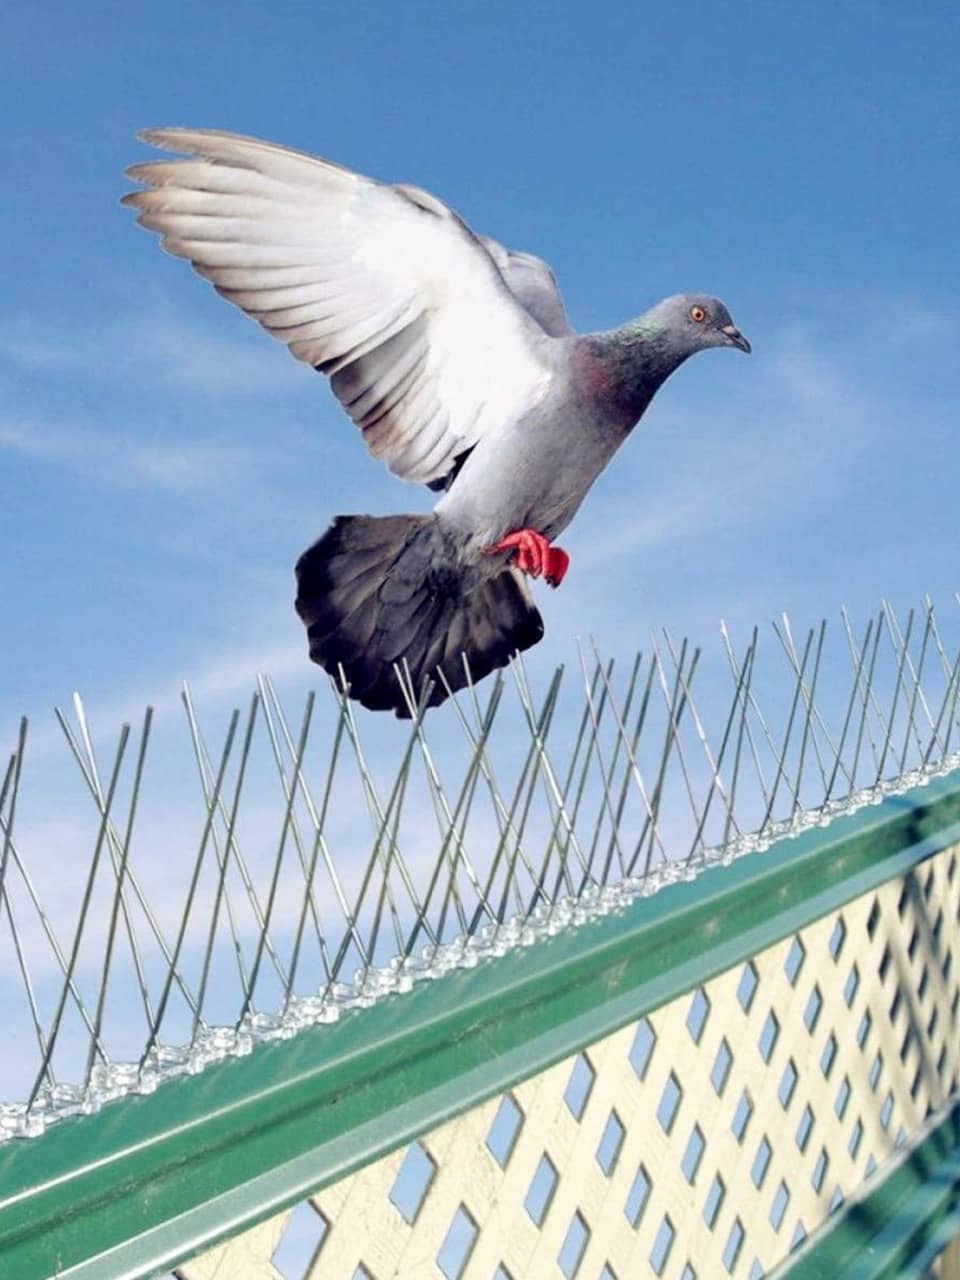 pigeon-net-for-balcony-near-me